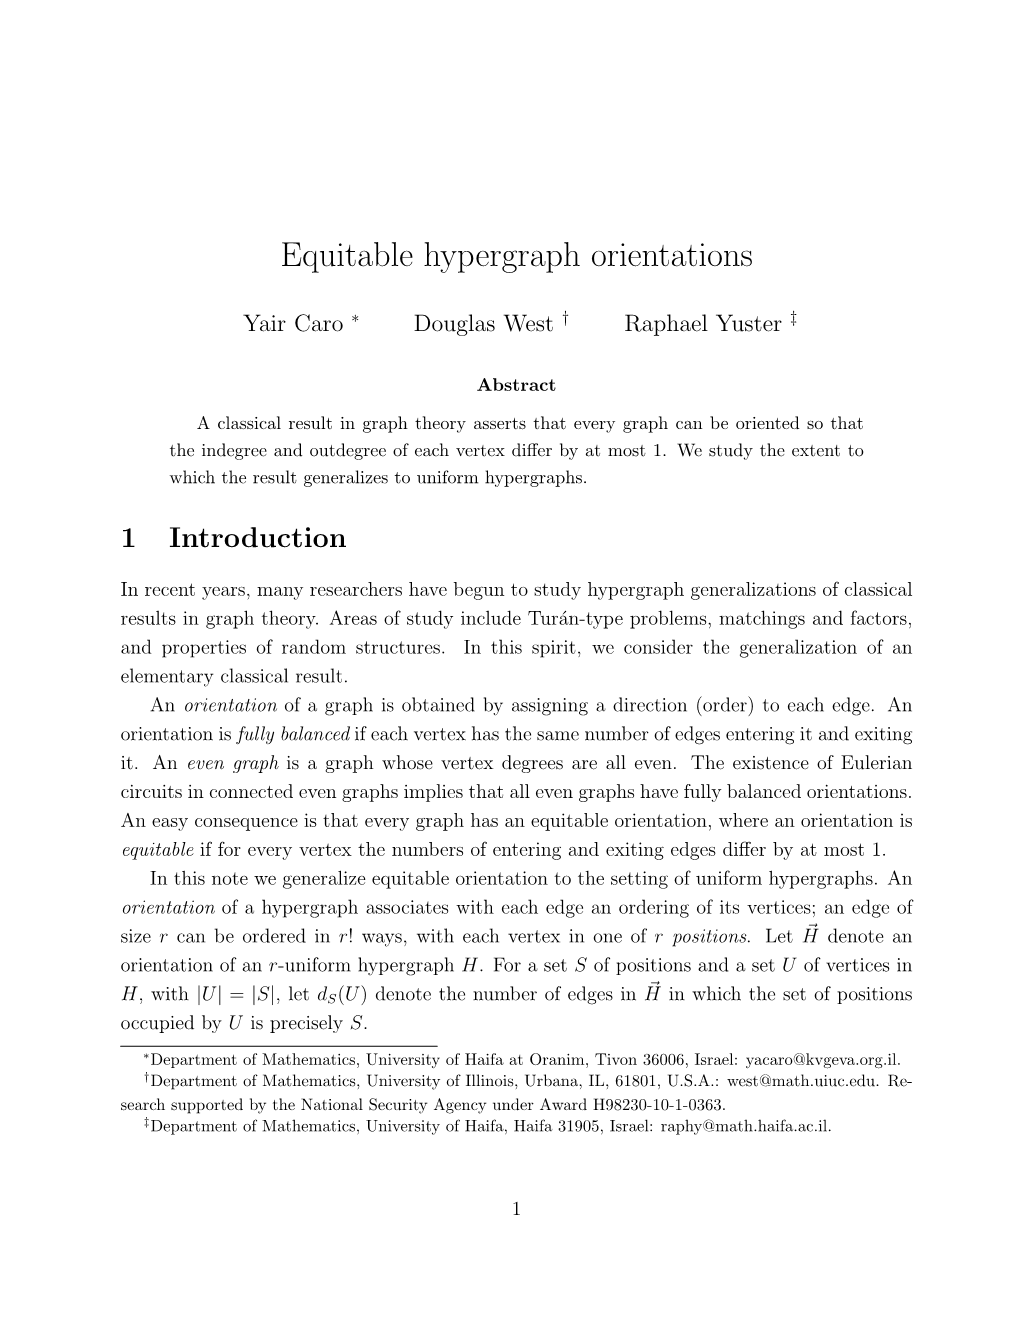 Equitable Hypergraph Orientations